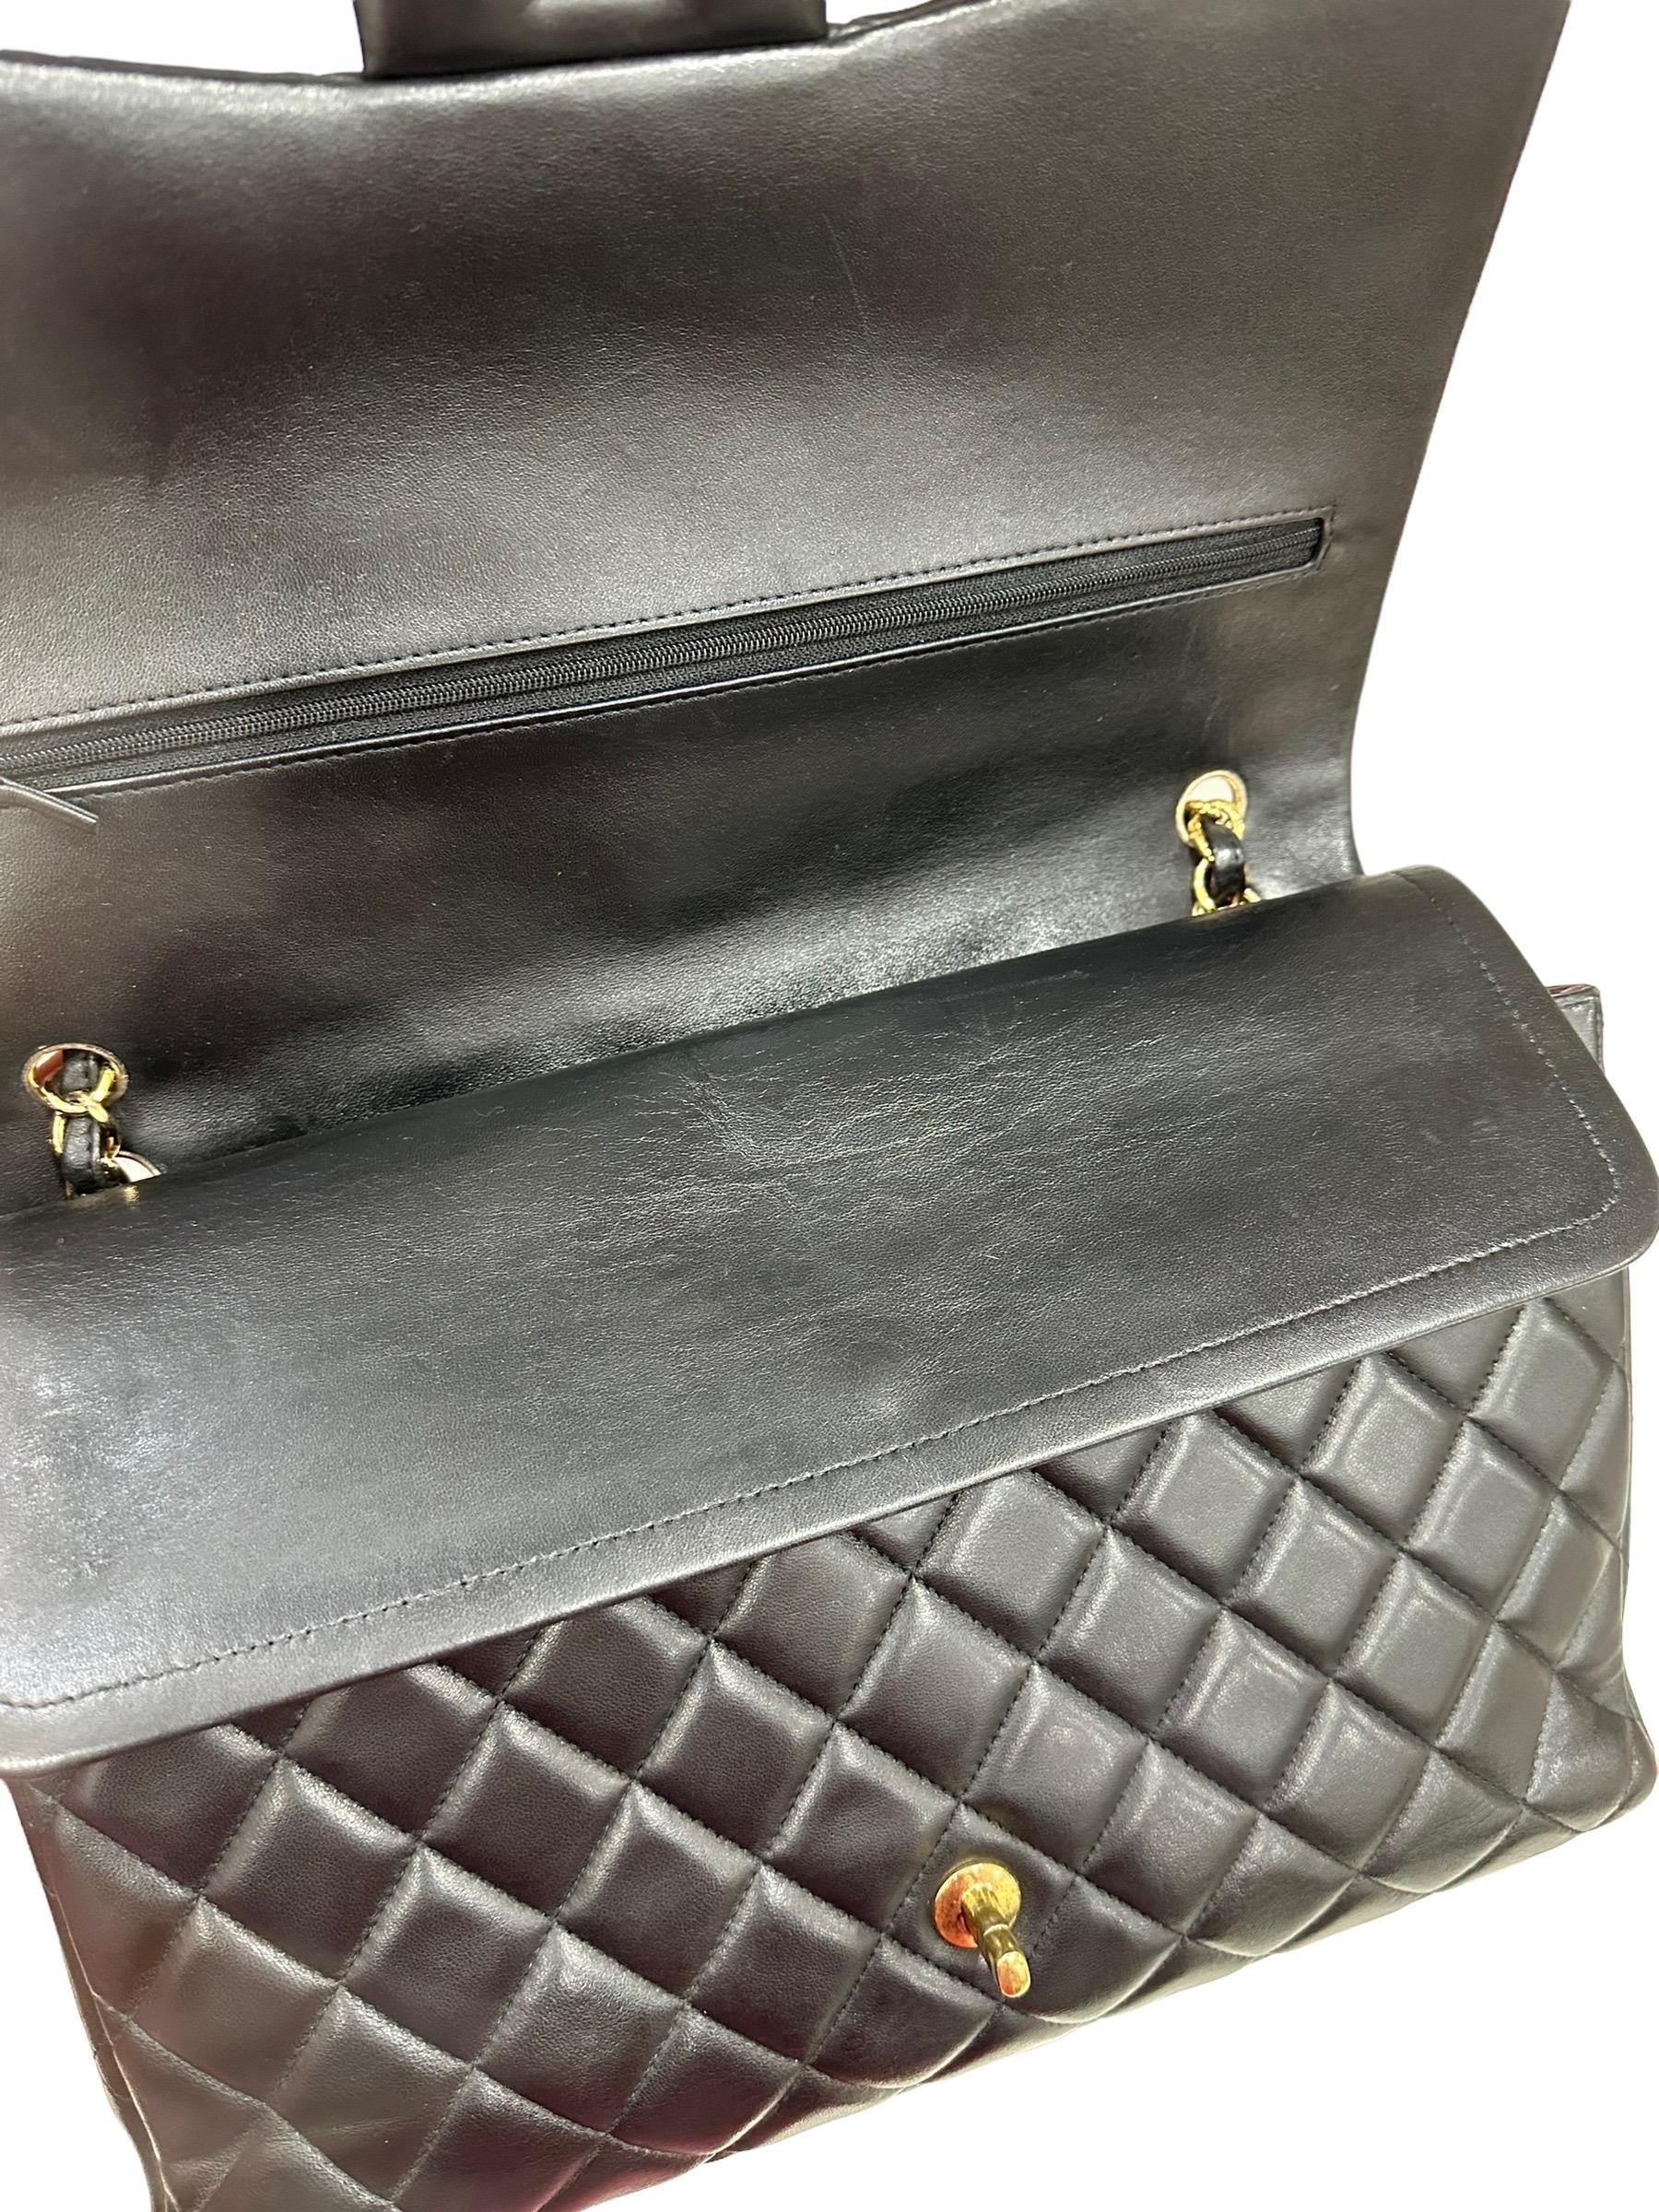 2011 Chanel Timeless Maxi Jumbo Black Leather Top Shoulder Bag For Sale 10